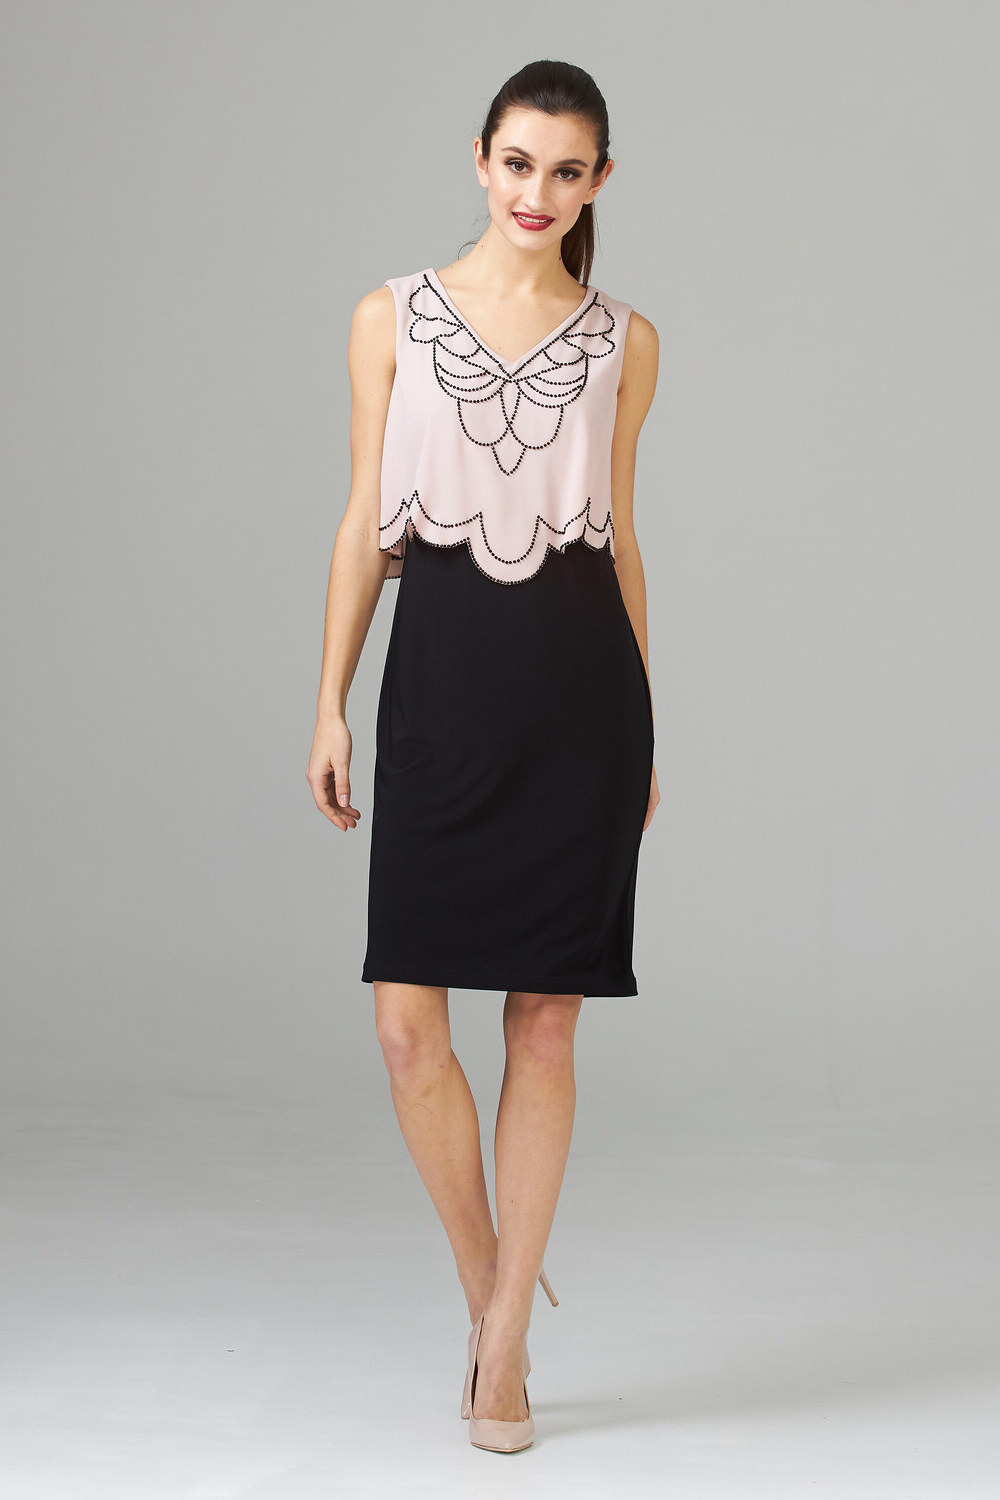 Joseph Ribkoff Dress Style 201361. Rose